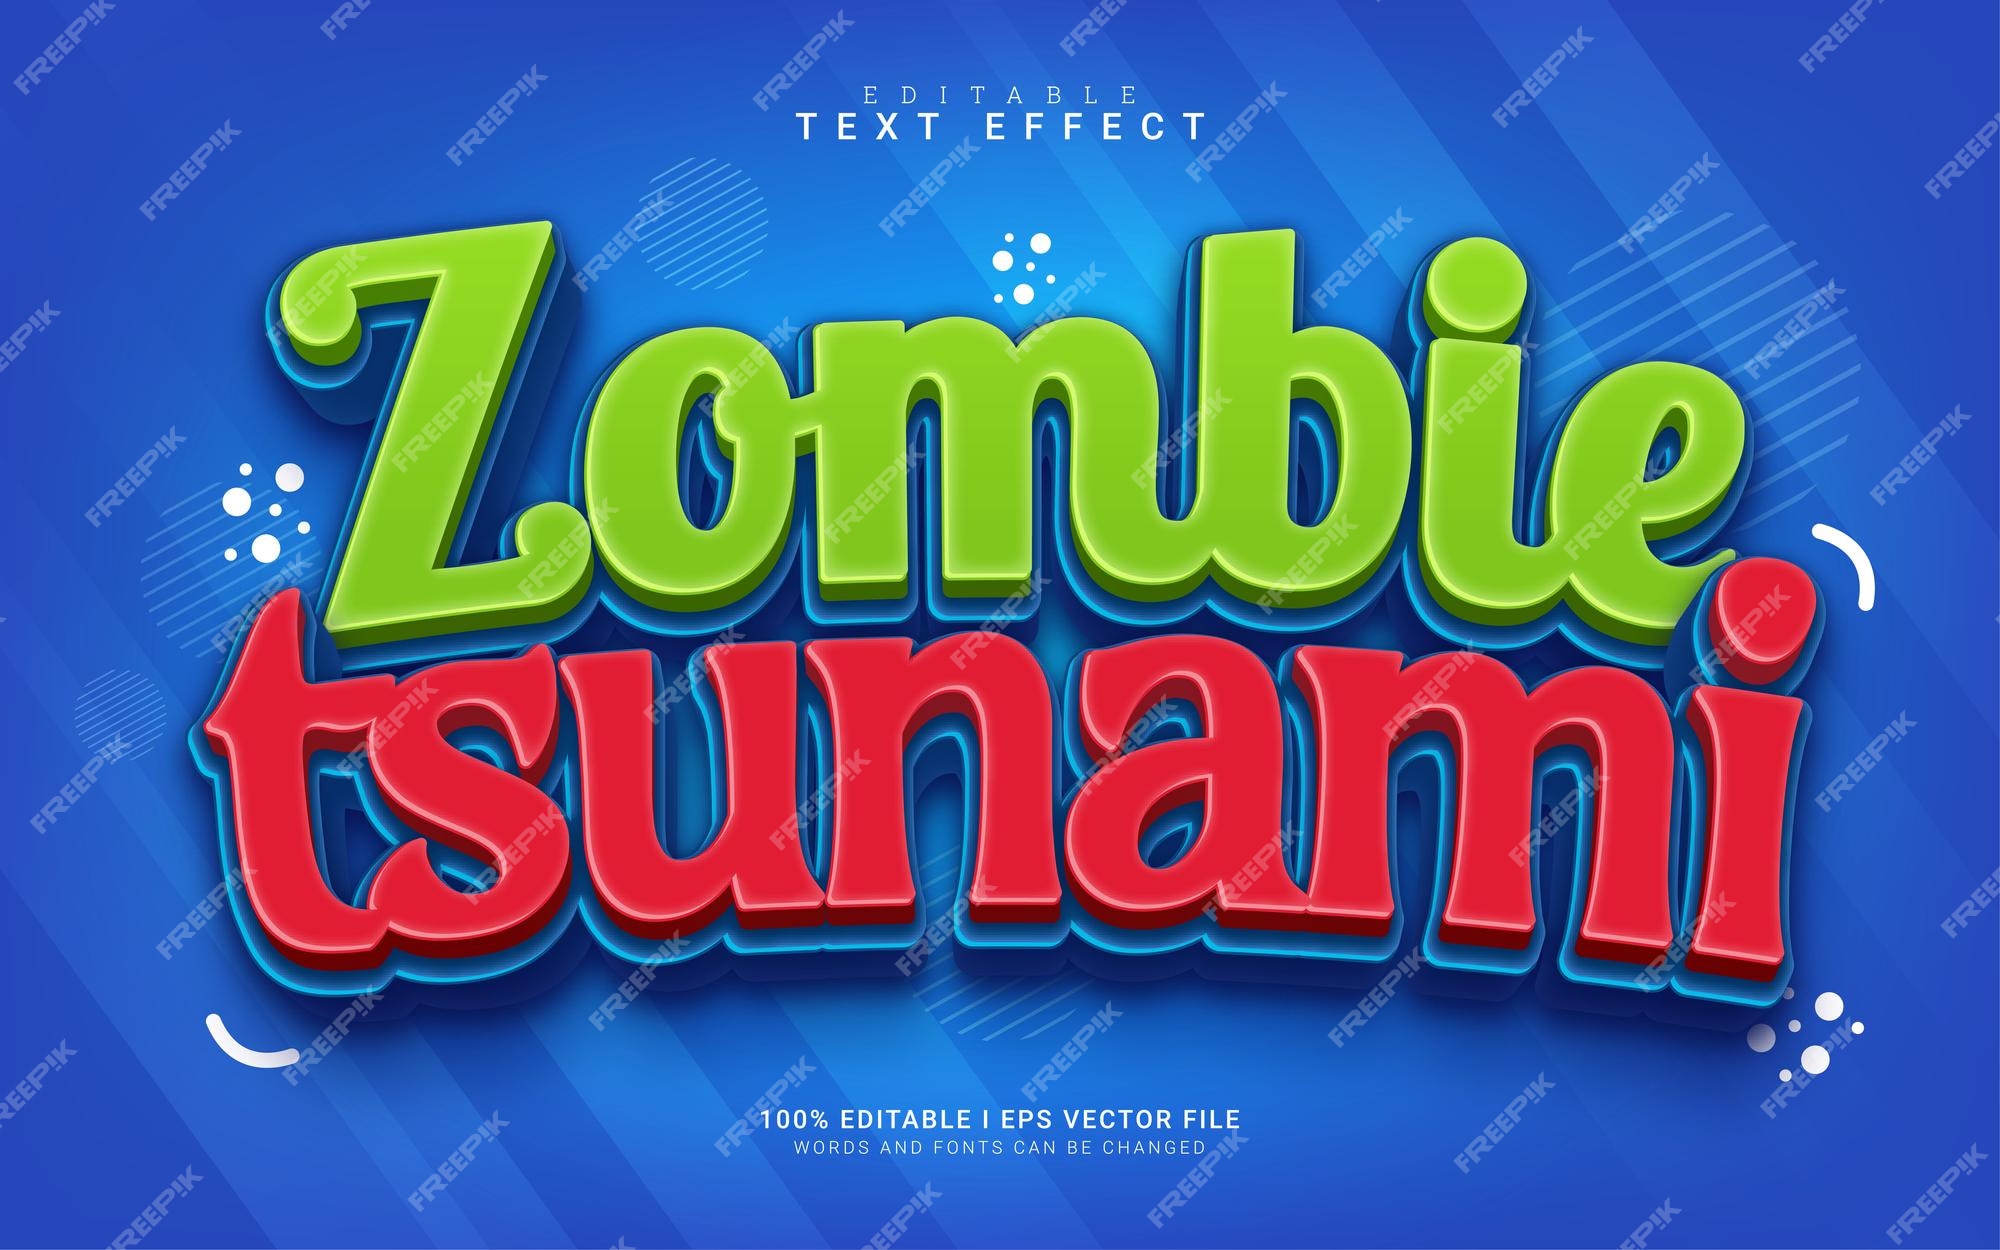 Zombie Tsunami, Software